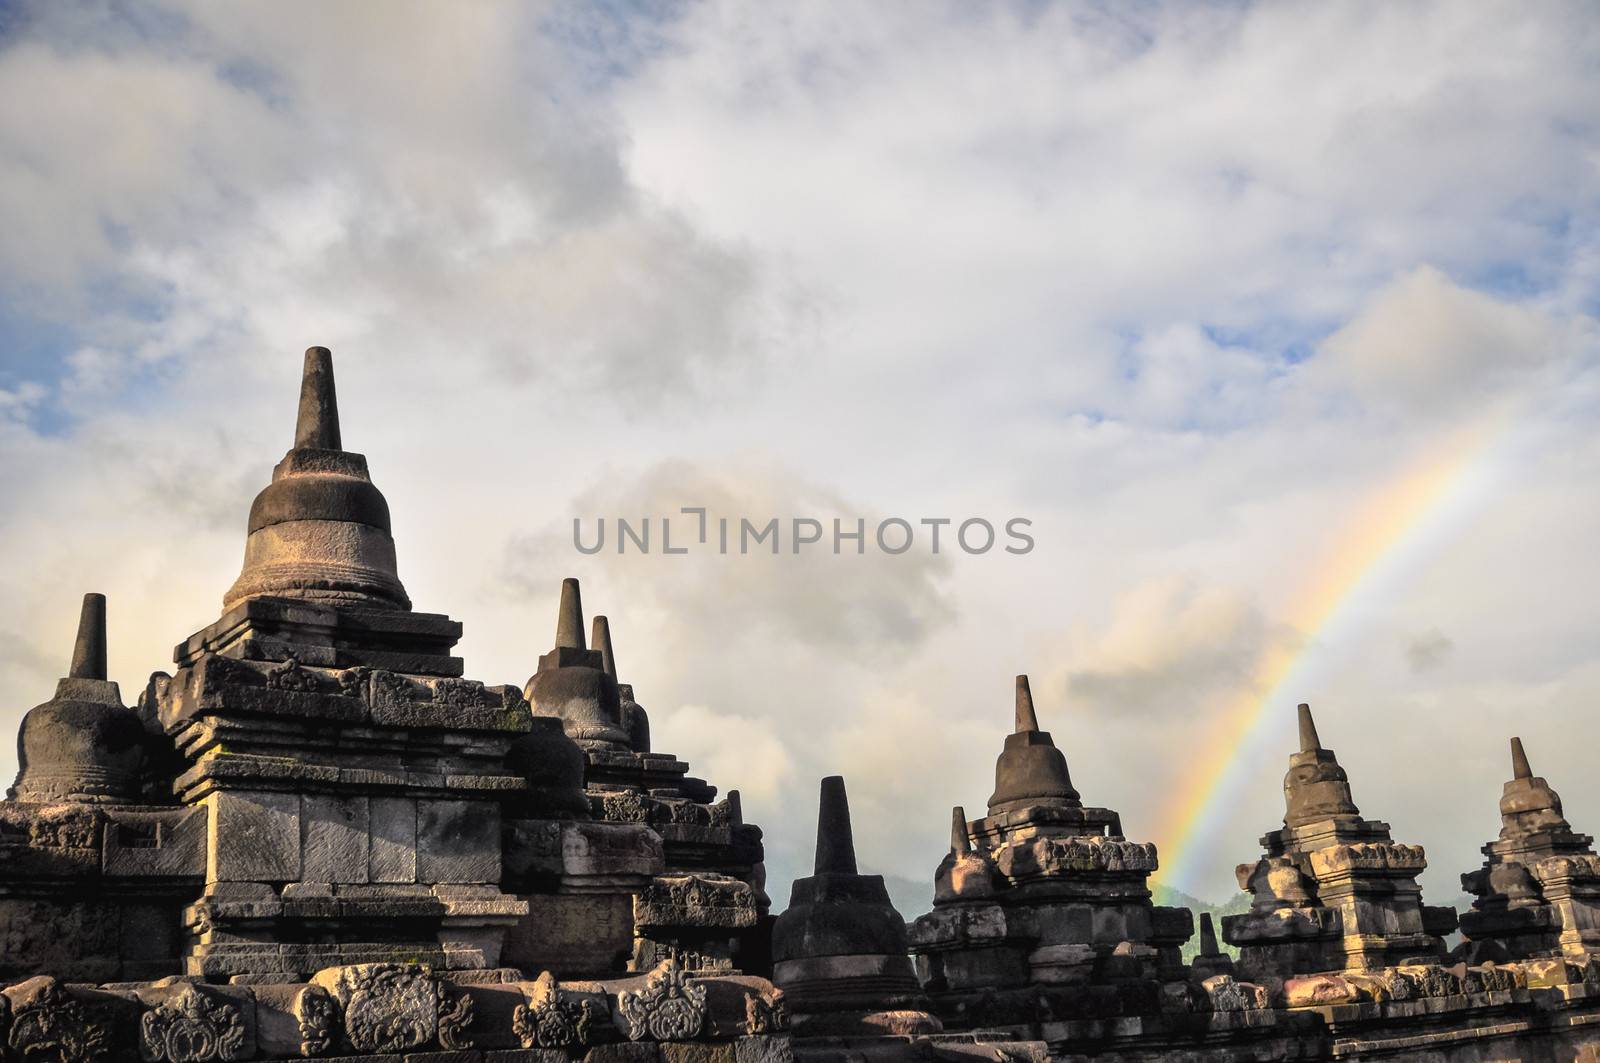 Rainbow over Stupa Buddist temple Borobudur complex in Yogjakart by weltreisendertj